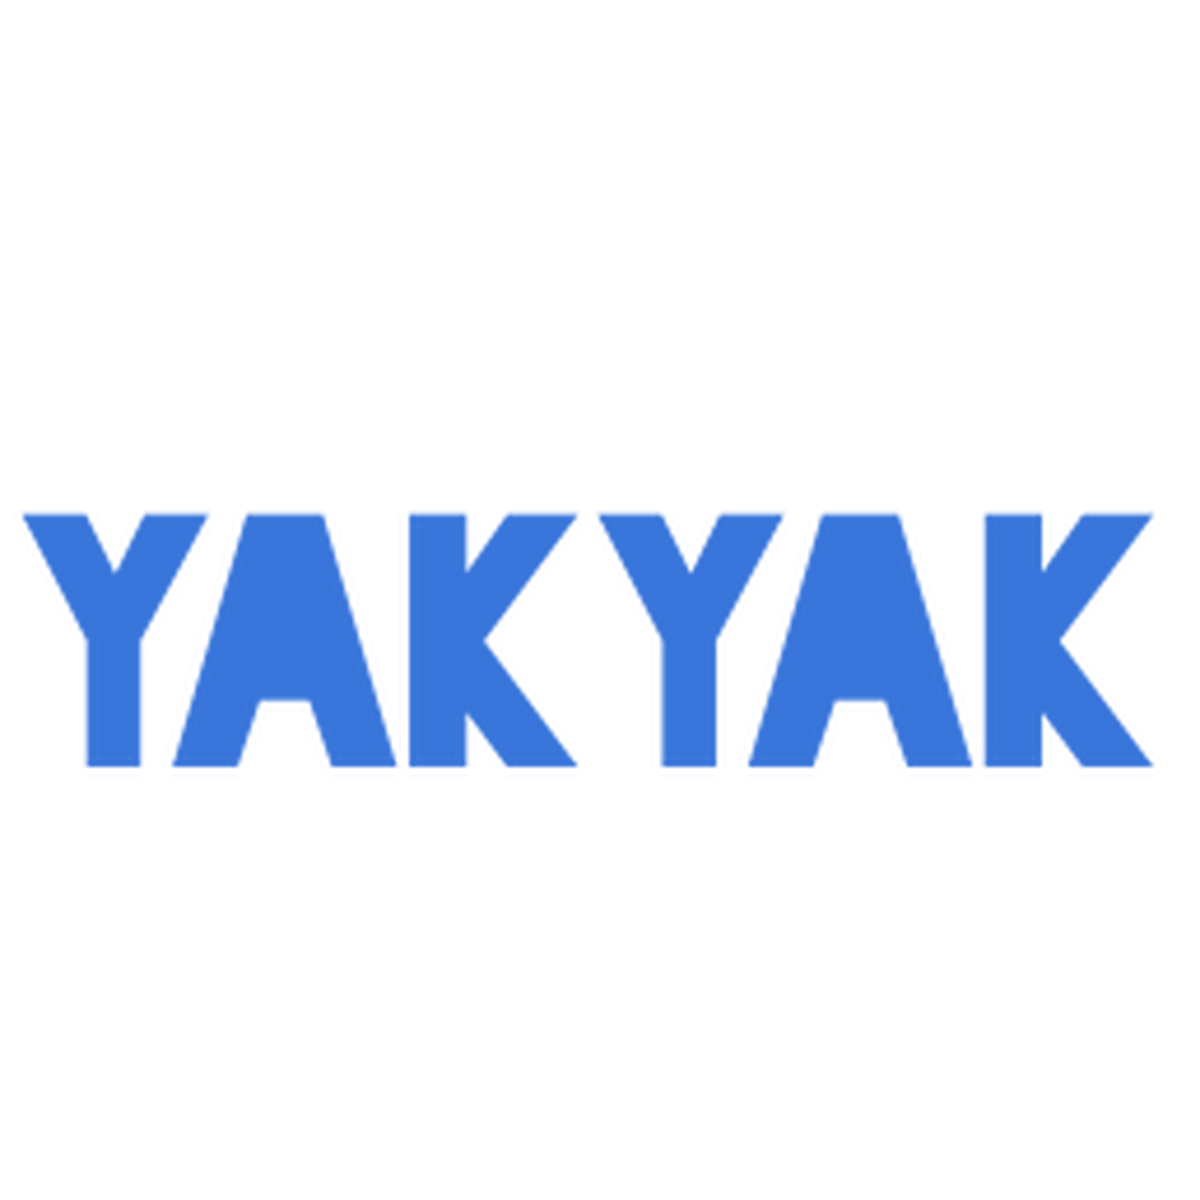 yakyak copy image from google photos